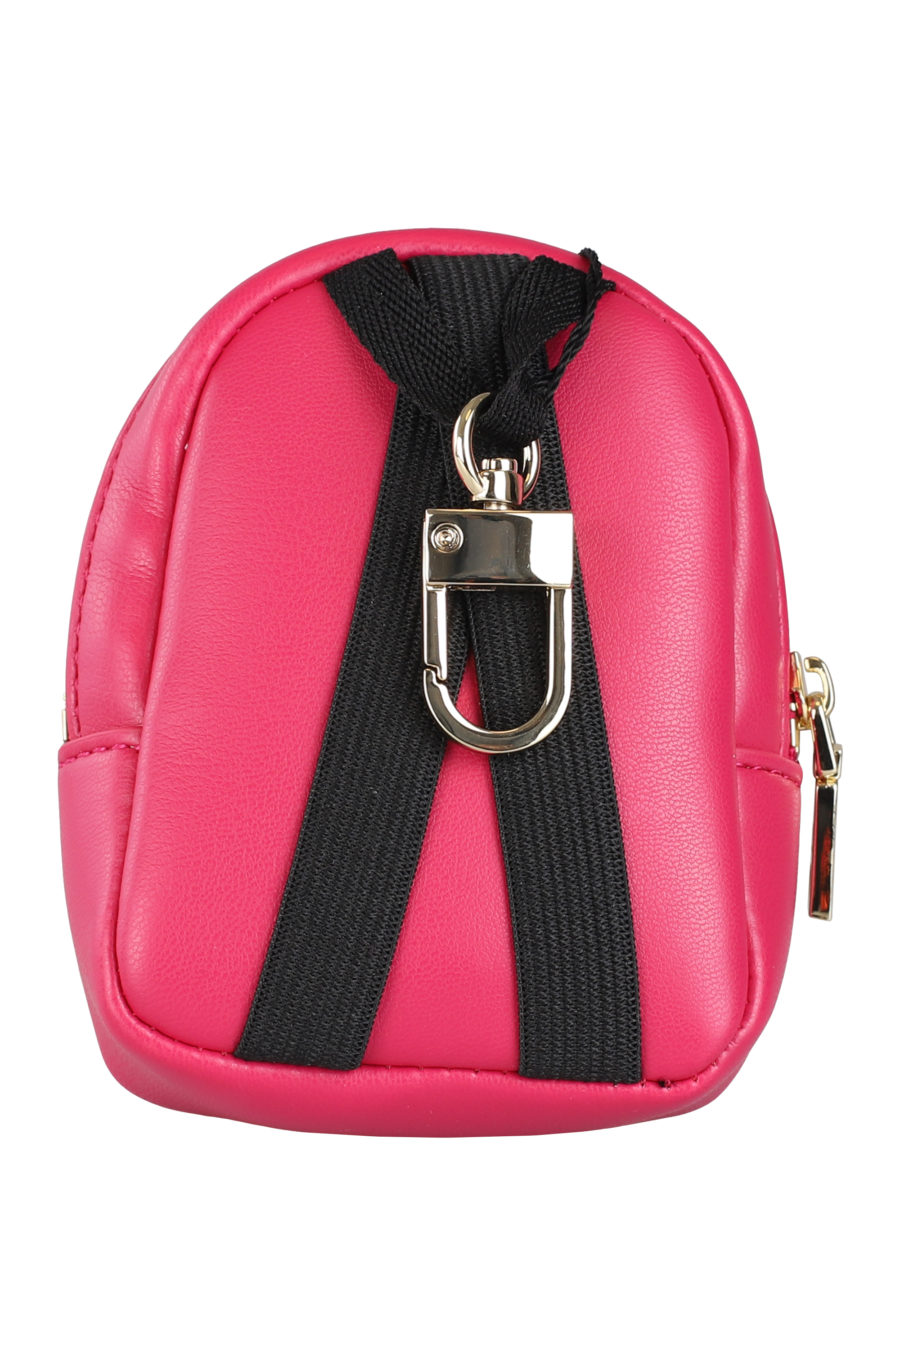 Llavero mini mochila rosa - IMG 9686